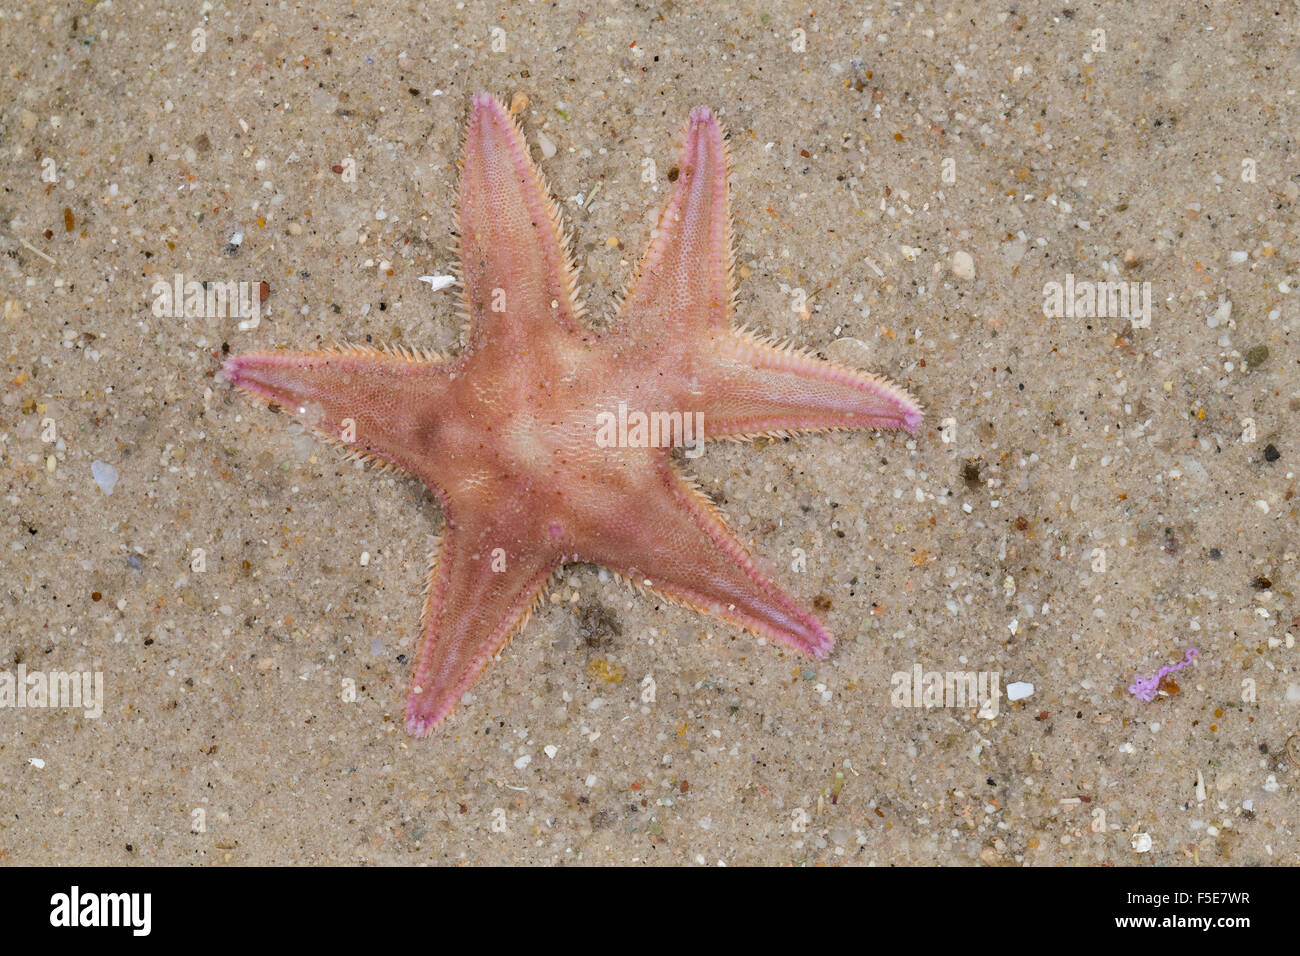 Sand sea star, Sand Star, Nordischer Kammstern, Regeneration, Seestern, Astropecten irregularis, Astropecten muelleri Stock Photo